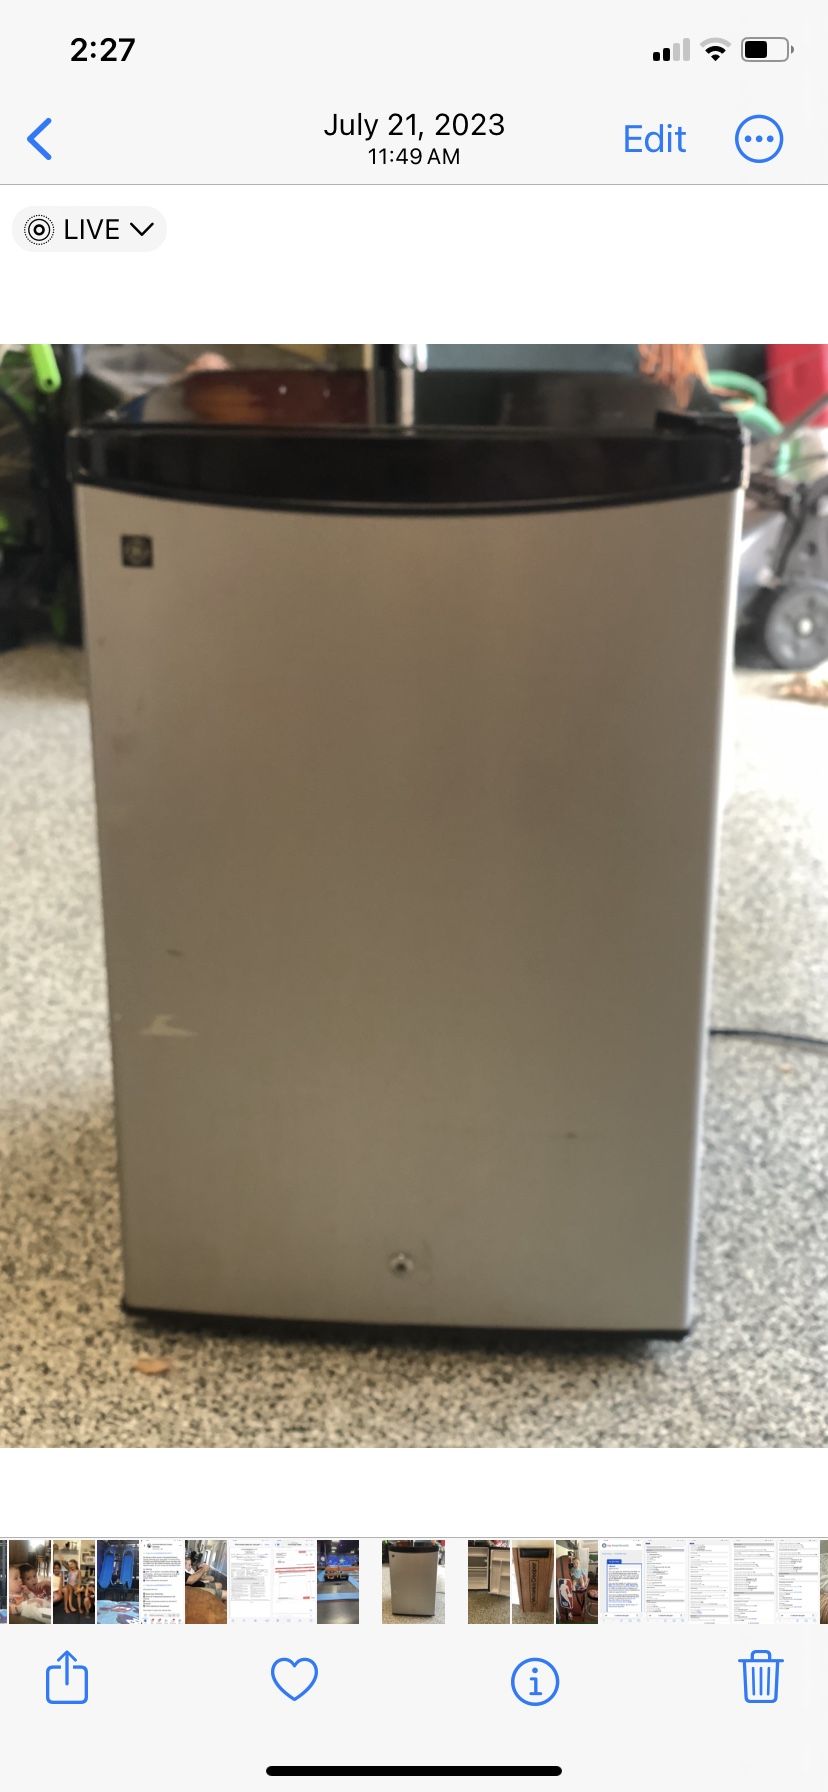 GE Mini Refrigerator/freezer